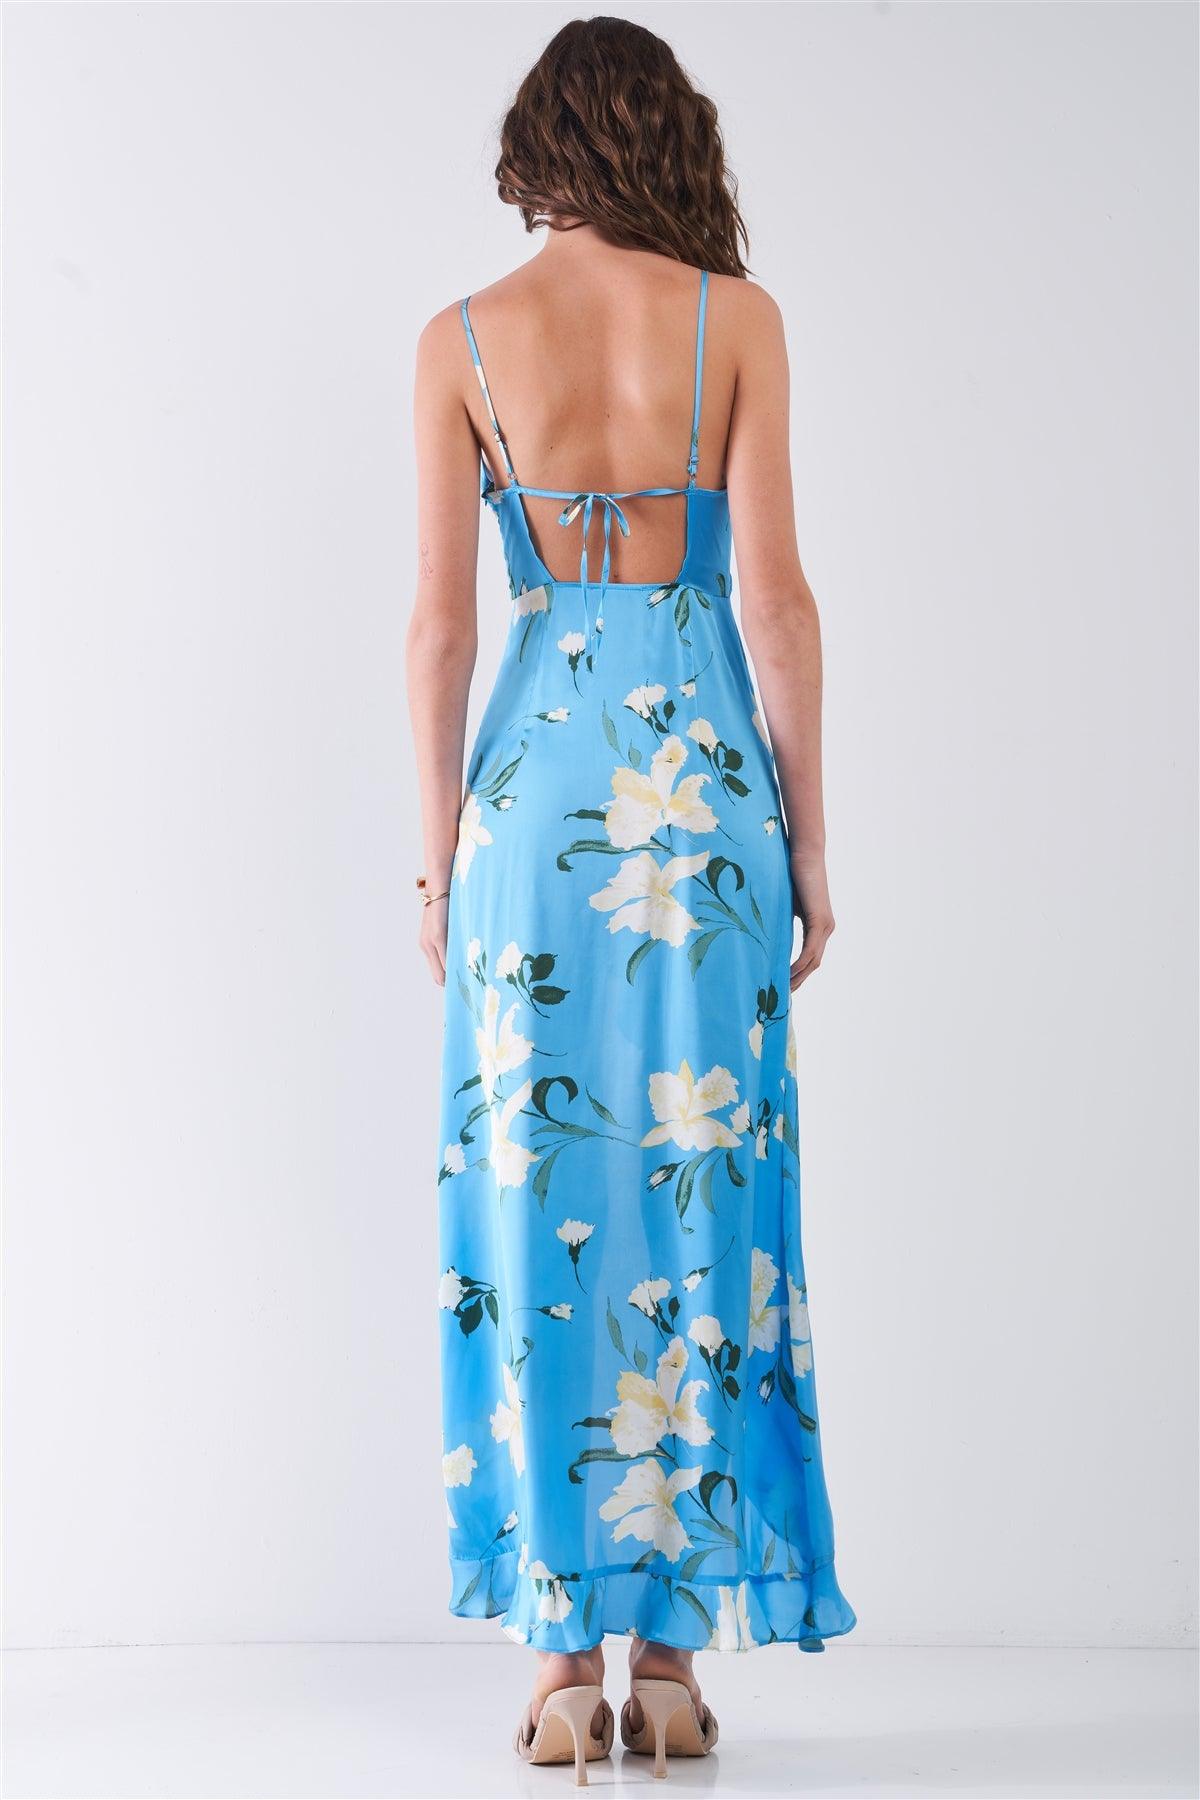 Sky Blue Satin Floral Print Sleeveless V-Neck Self-Tie Back Ruffle Trim Side Slit Detail Maxi Dress /3-2-1